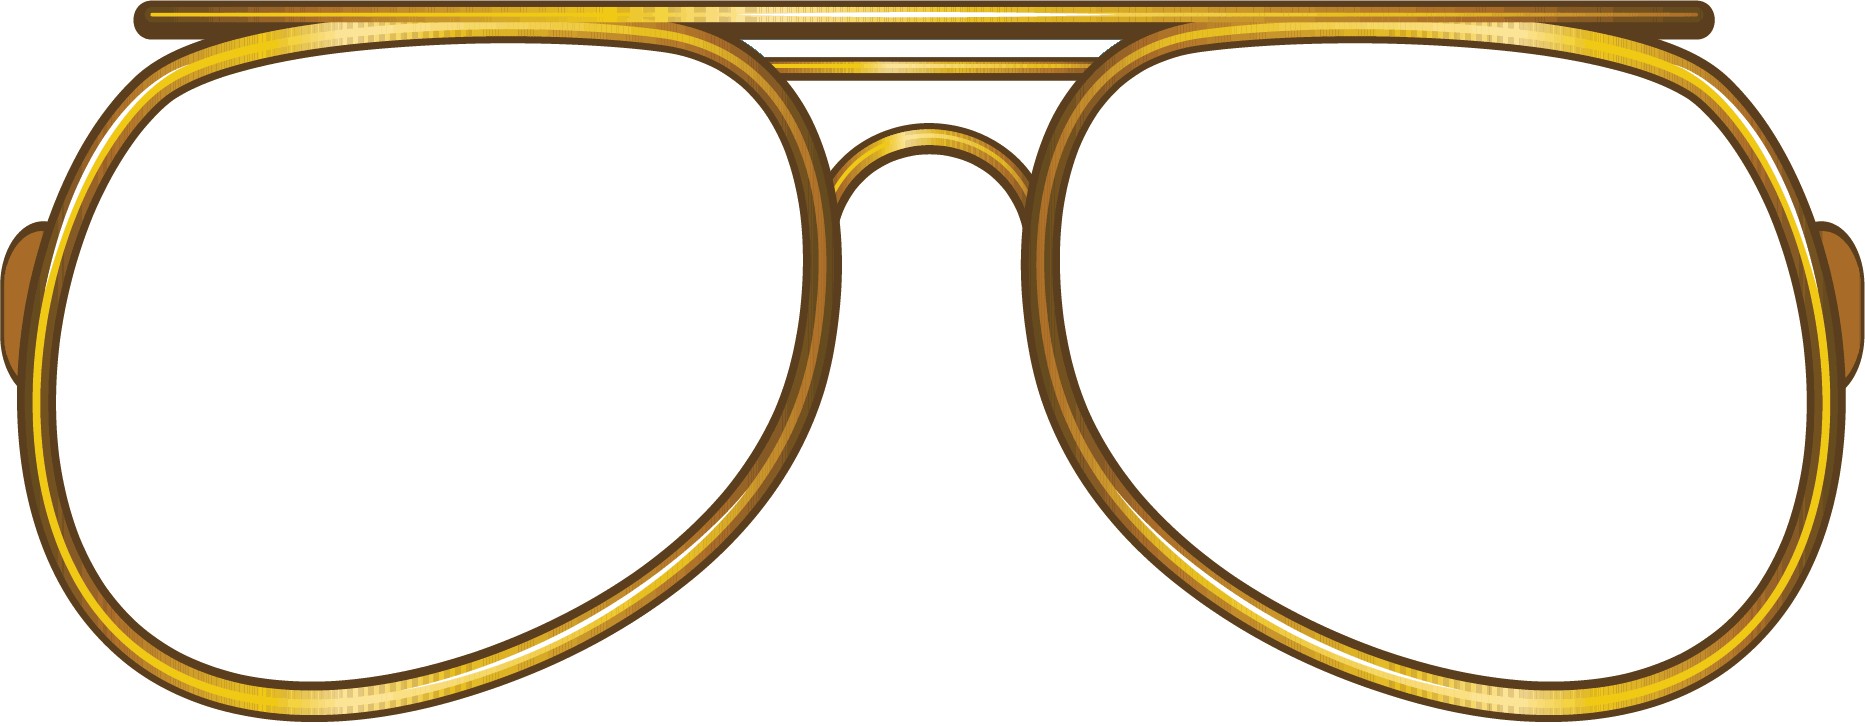 Glasses clip art.